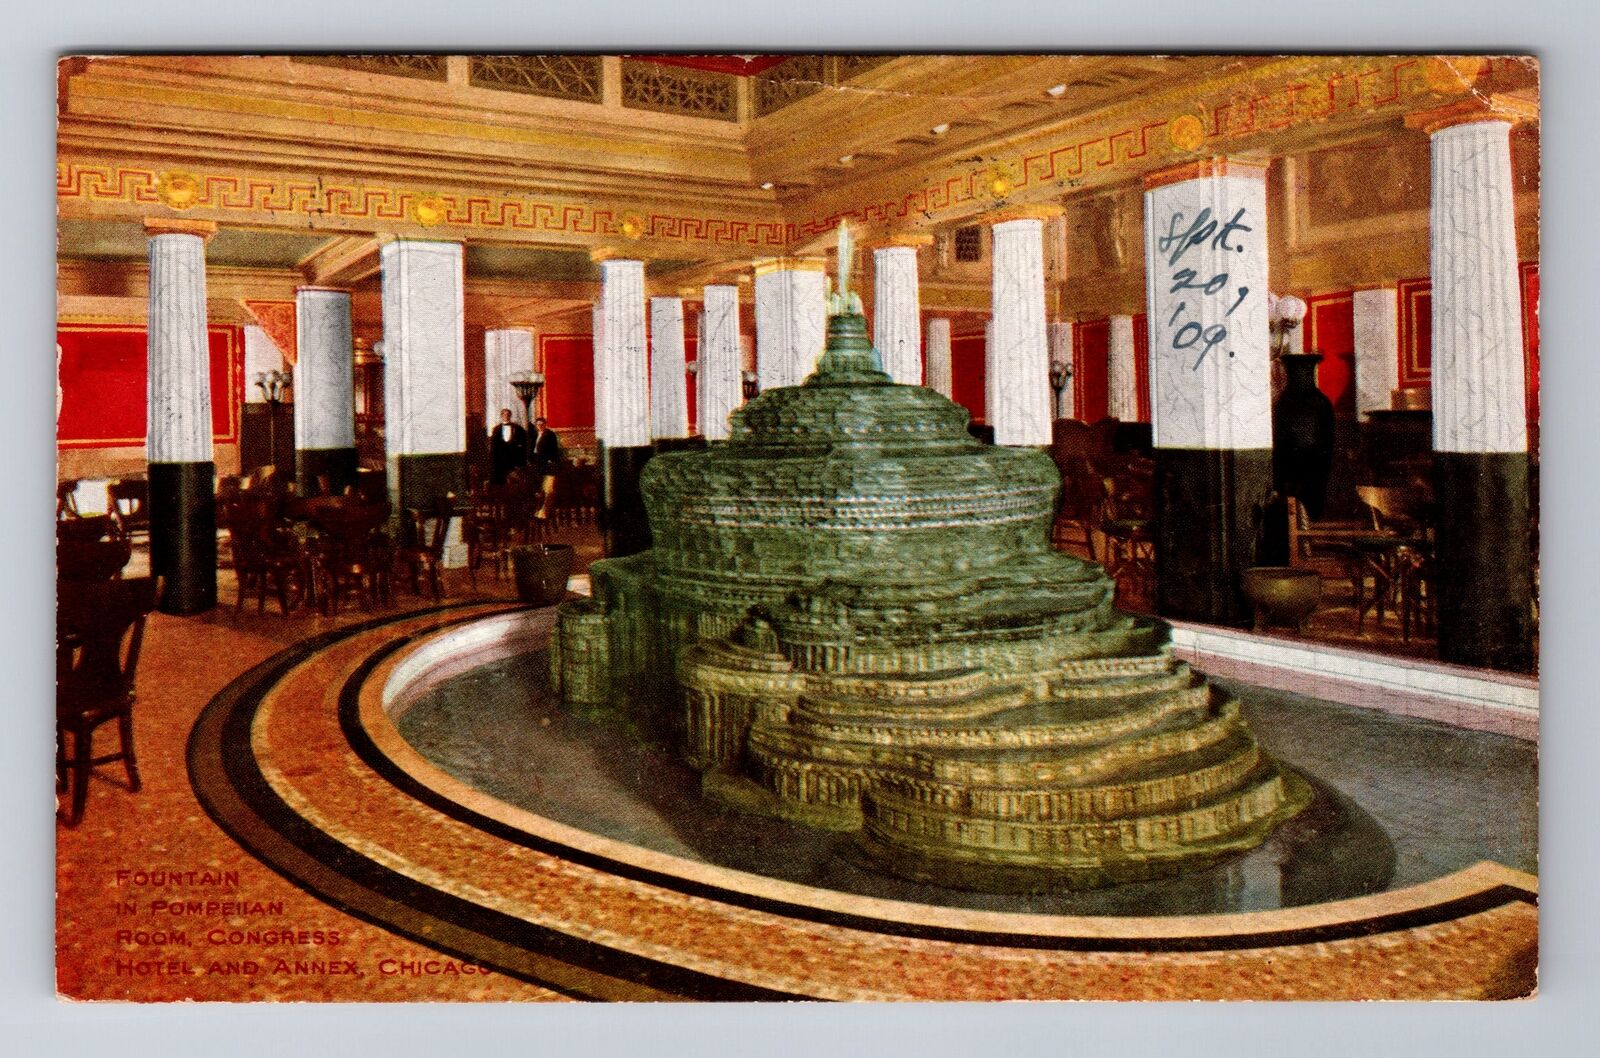 Chicago IL-Illinois, Fountain In Pompeiian Room Congress Hotel Vintage Postcard